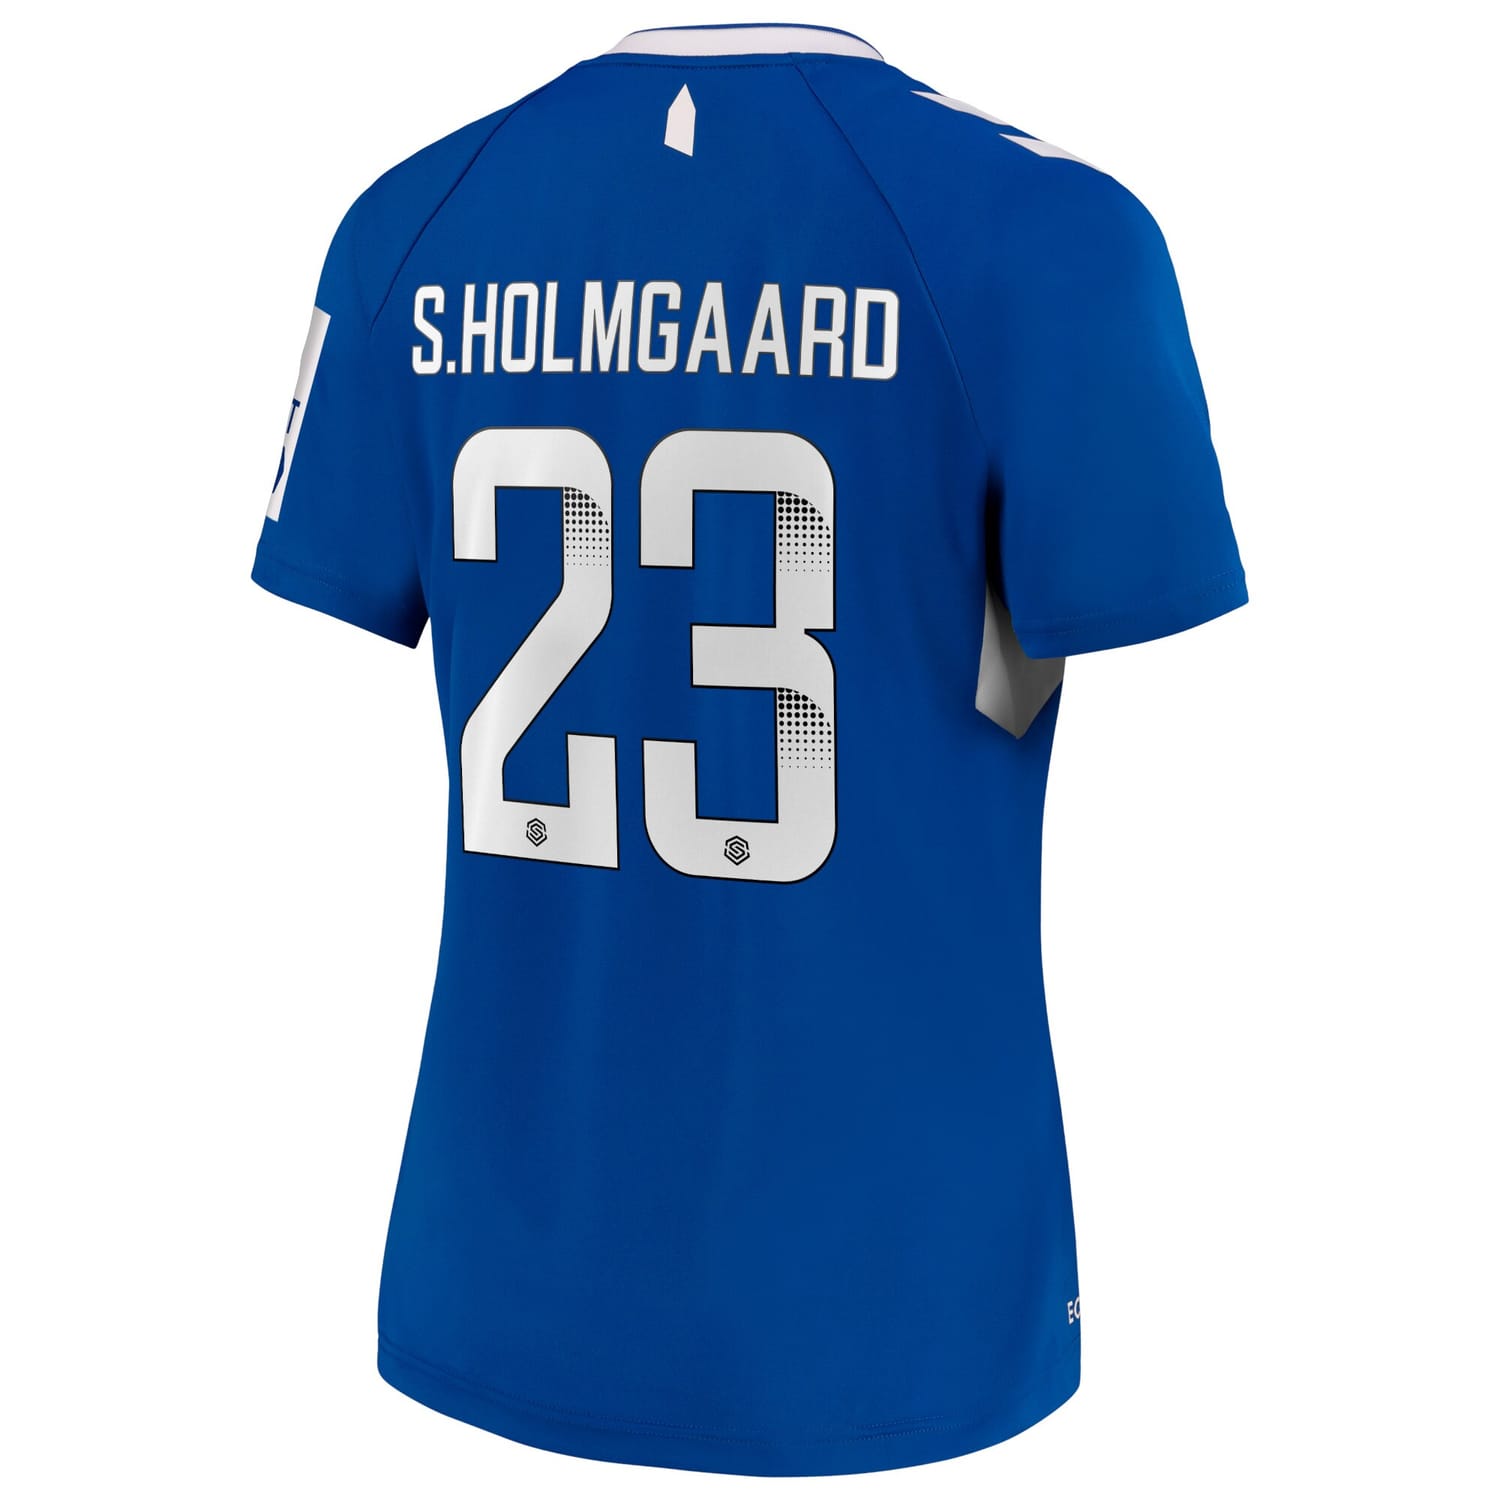 Premier League Everton Home WSL Jersey Shirt 2022-23 player Sara Holmgaard 23 printing for Women